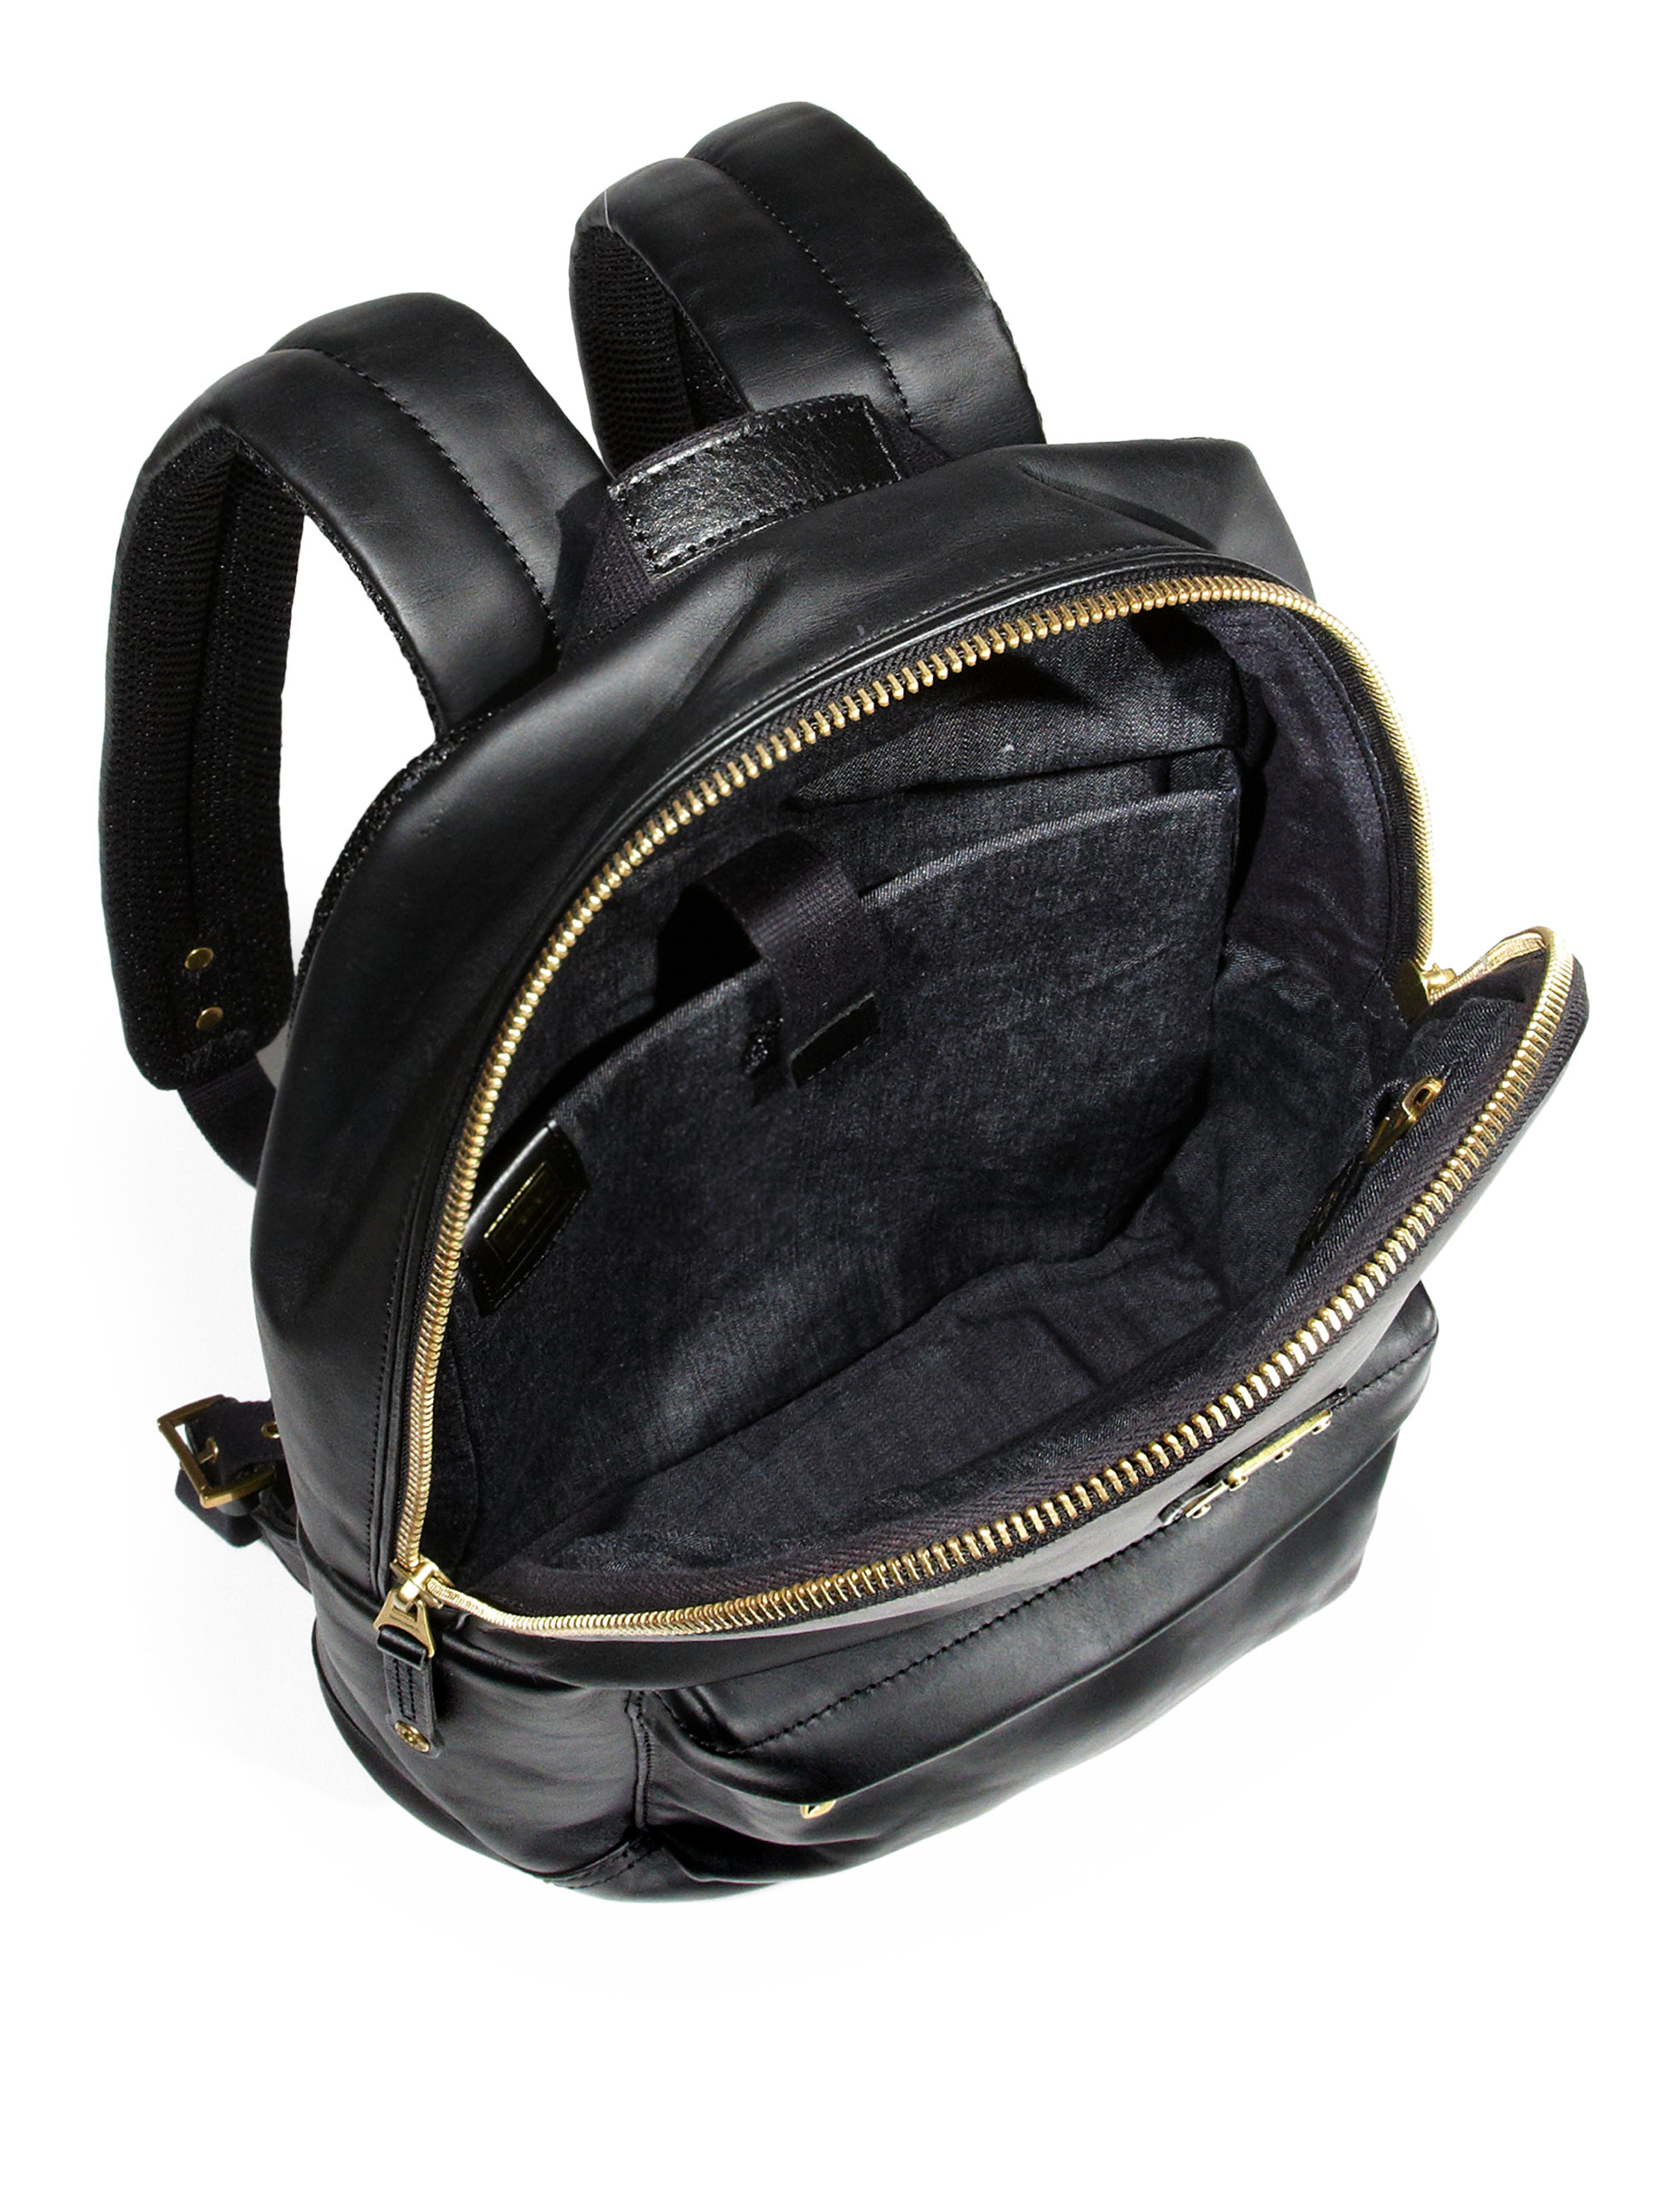 Lyst - Diesel Leather Clubber Backpack in Black for Men